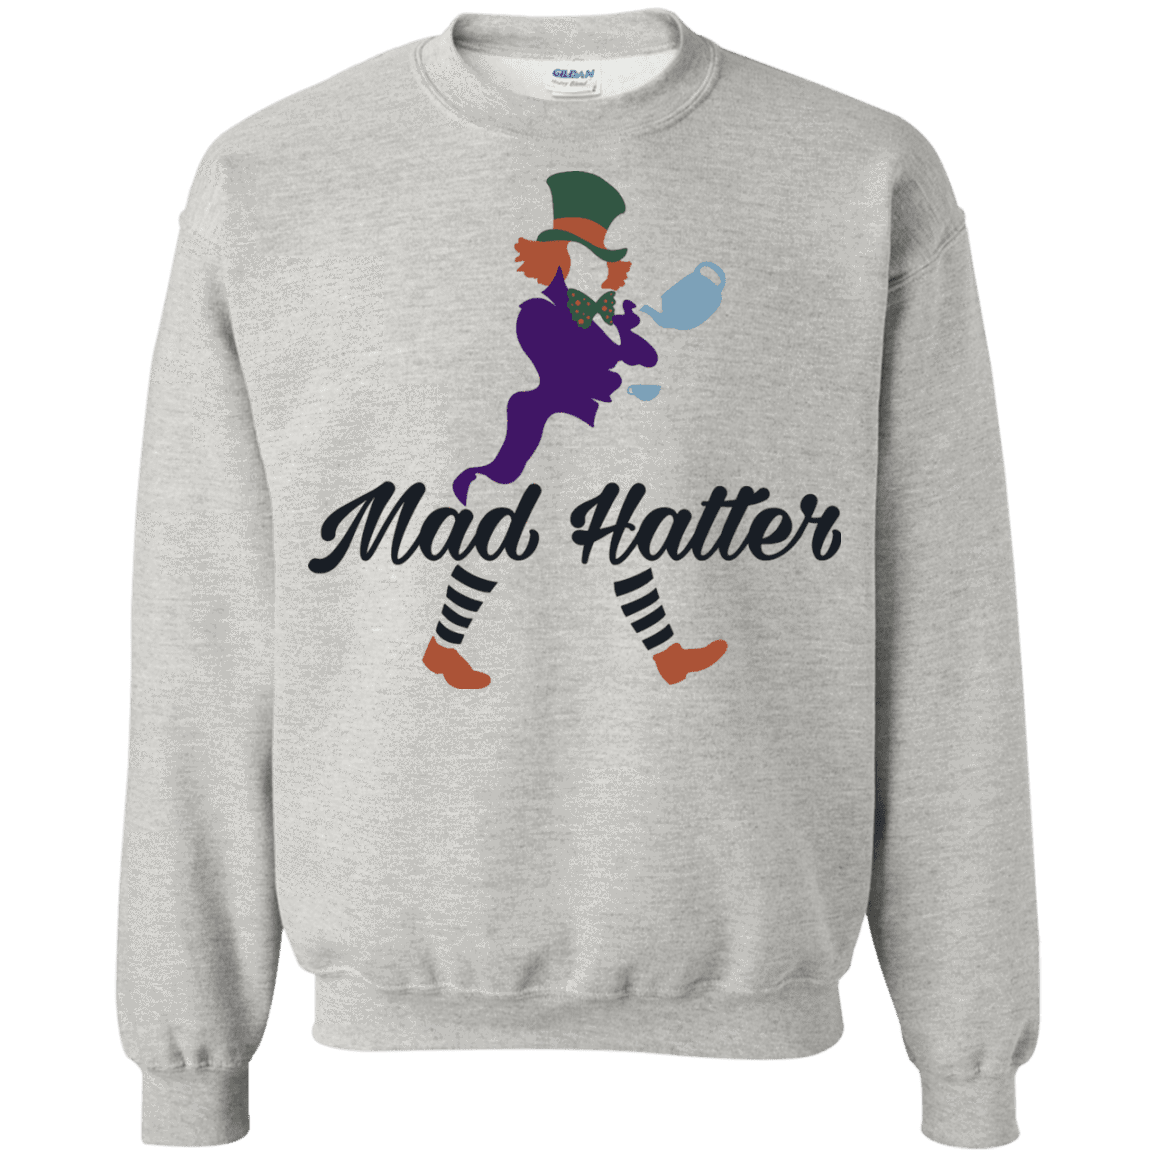 Sweatshirts Ash / Small Mad Hattter Crewneck Sweatshirt